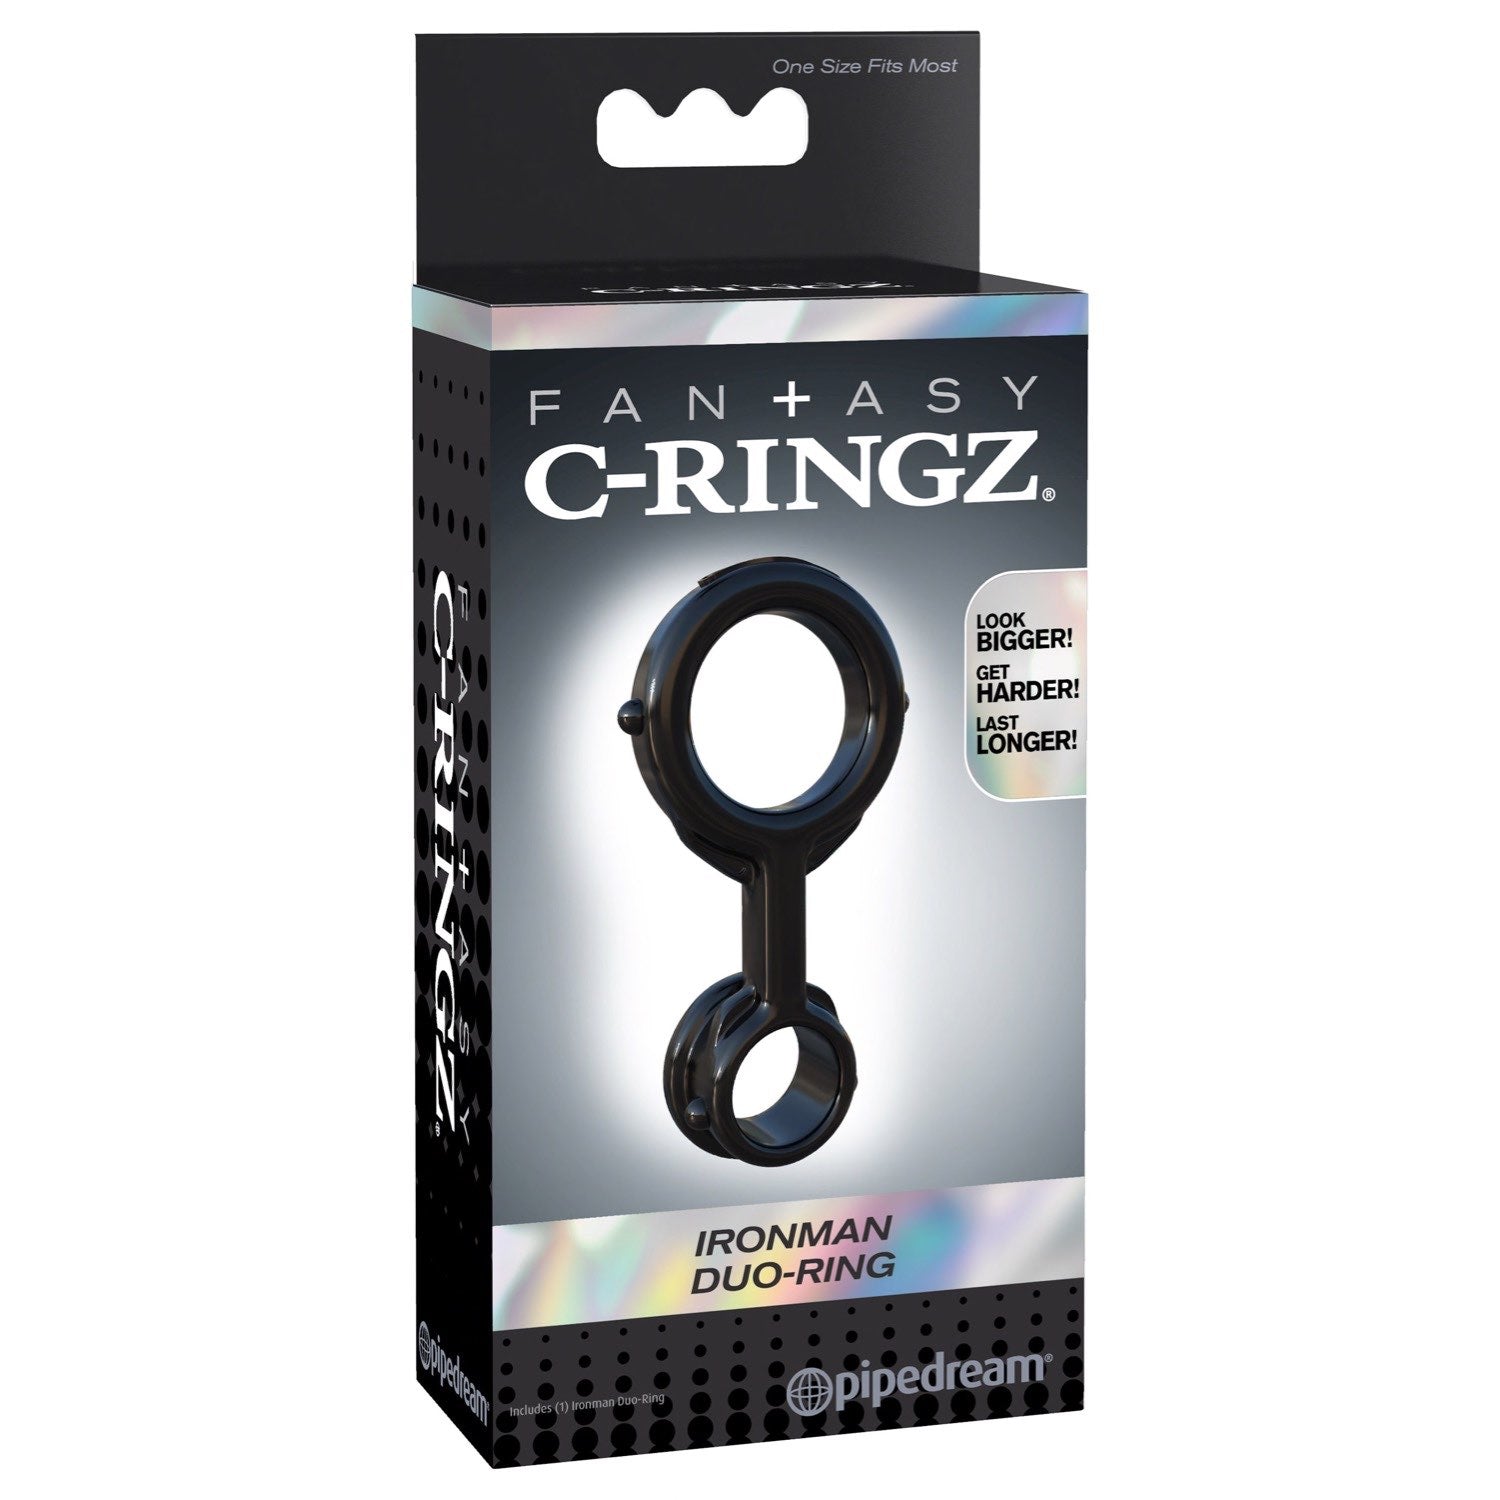 幻想 C-Ringz Fantasy C-ringz 钢铁侠双环戒指 - 黑色公鸡和球戒指 by Pipedream